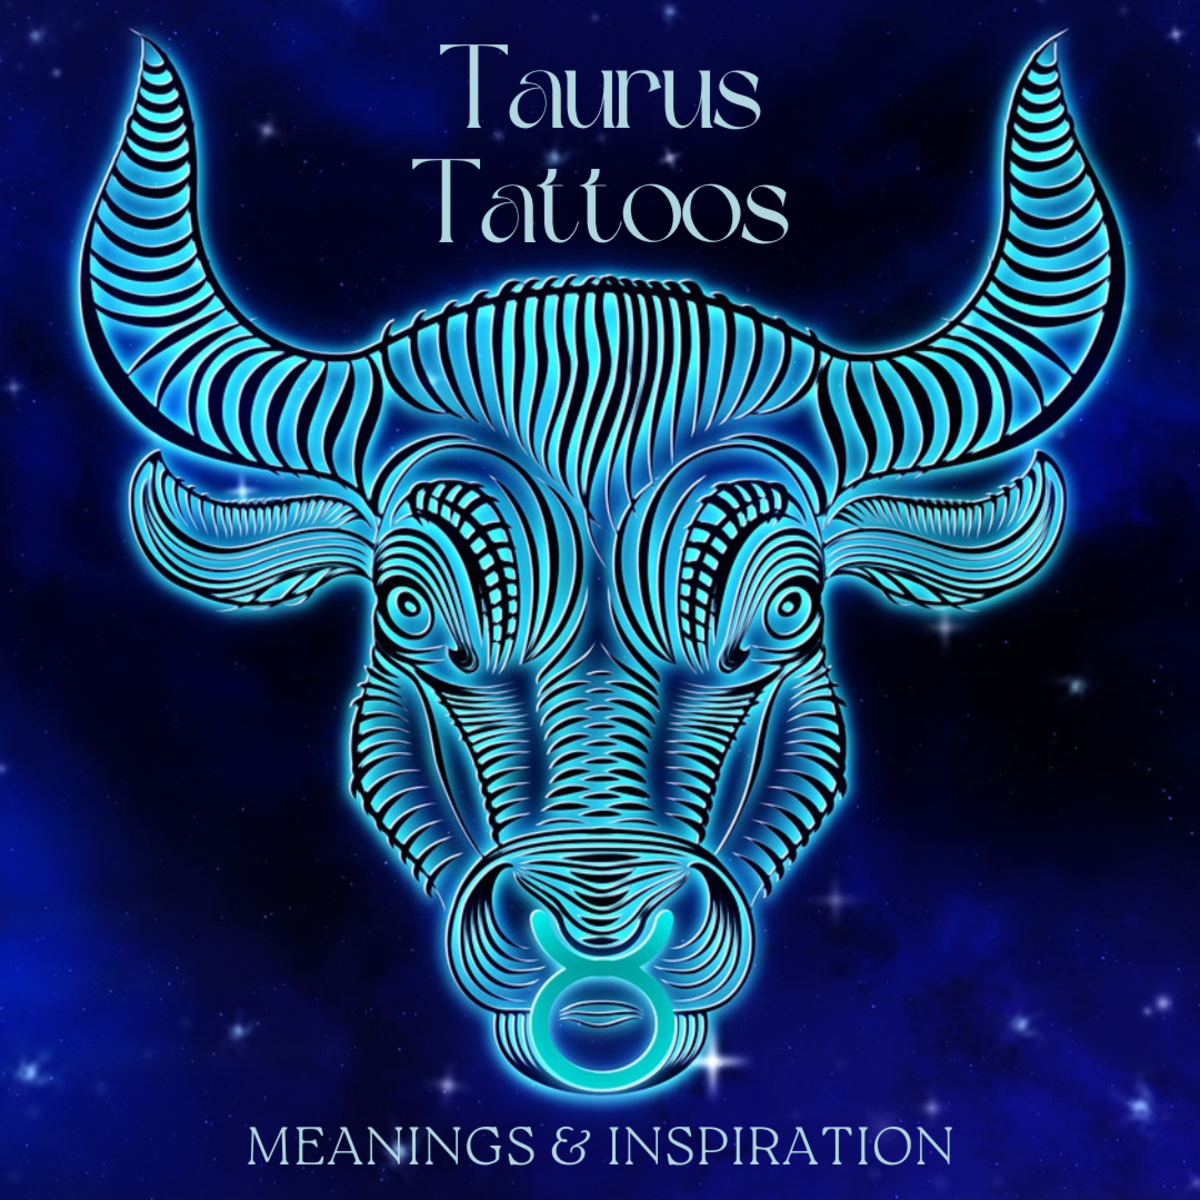 Tattoo Ideas for Zodiac Signs: Taurus (Earth Sign)